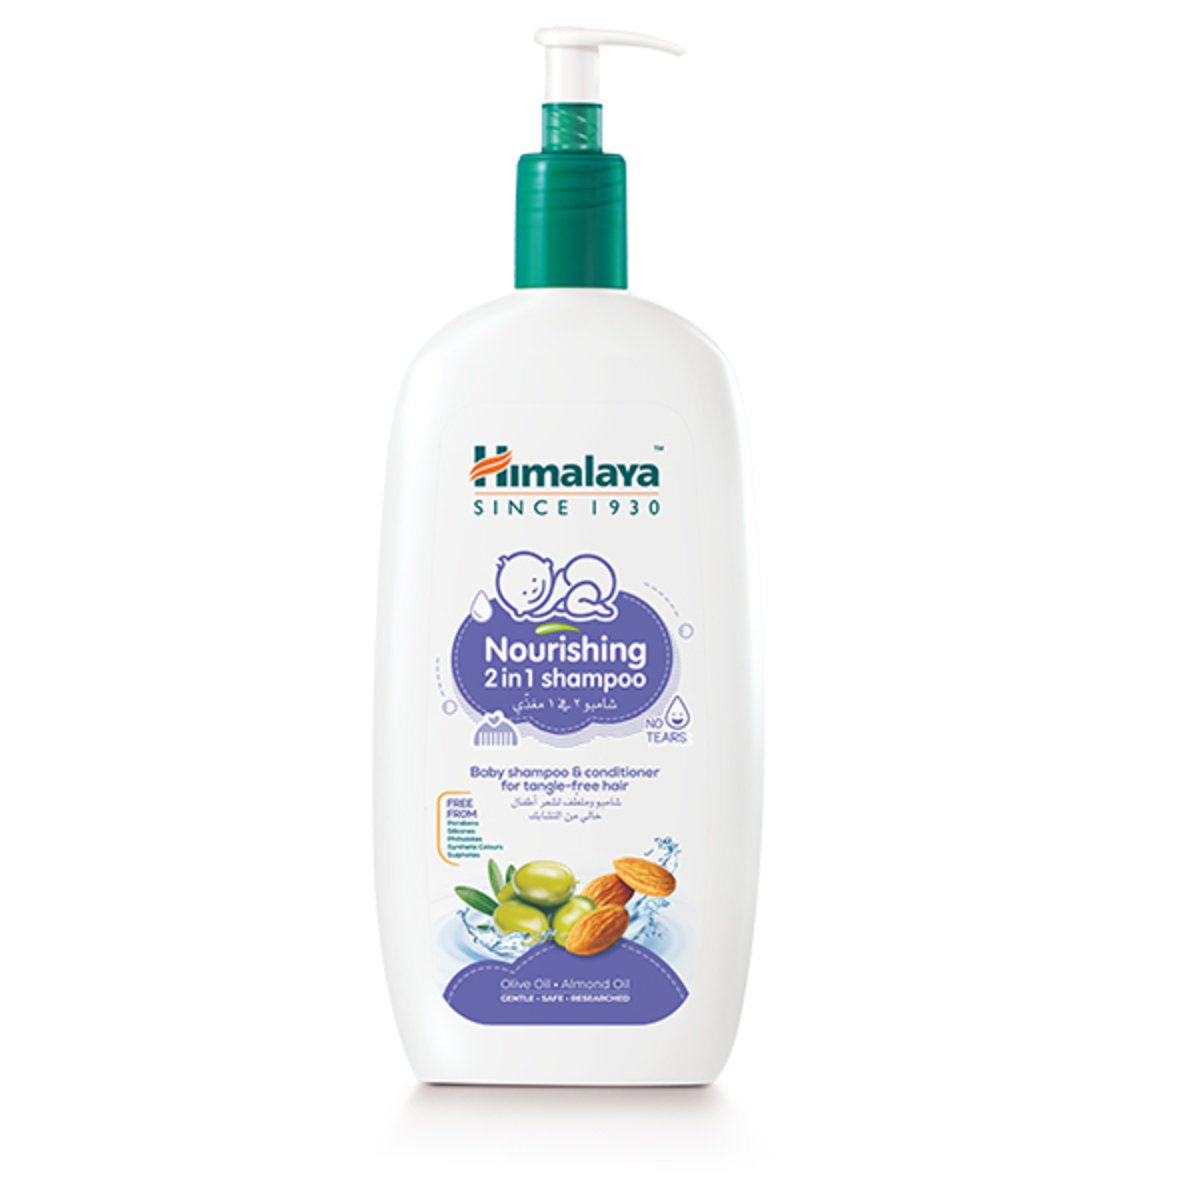 Himalaya Baby Shampoo & Conditioner 2in1 Nourishing 800ml